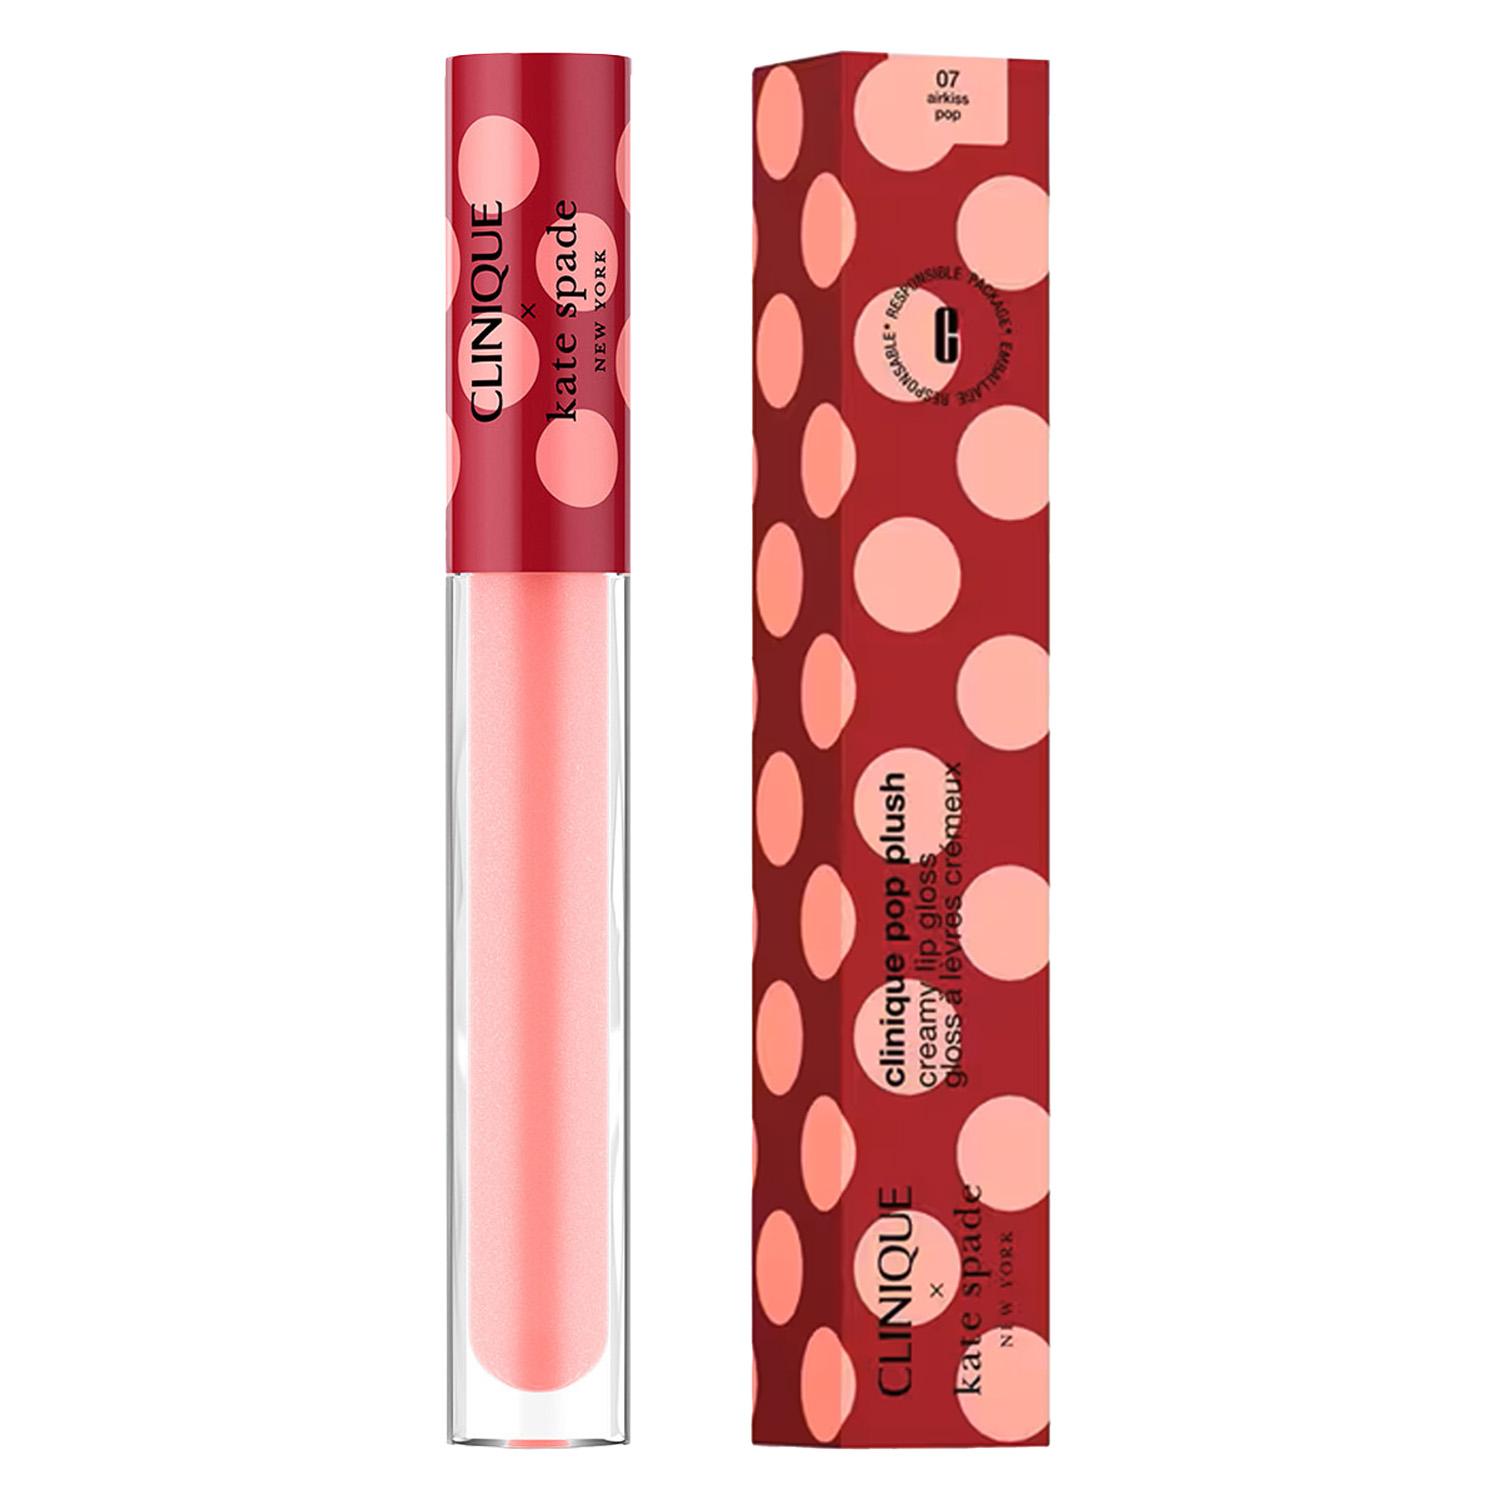 Clinique Lips - Decorated Kate Spade Pop Plush 07 Airkiss Pop